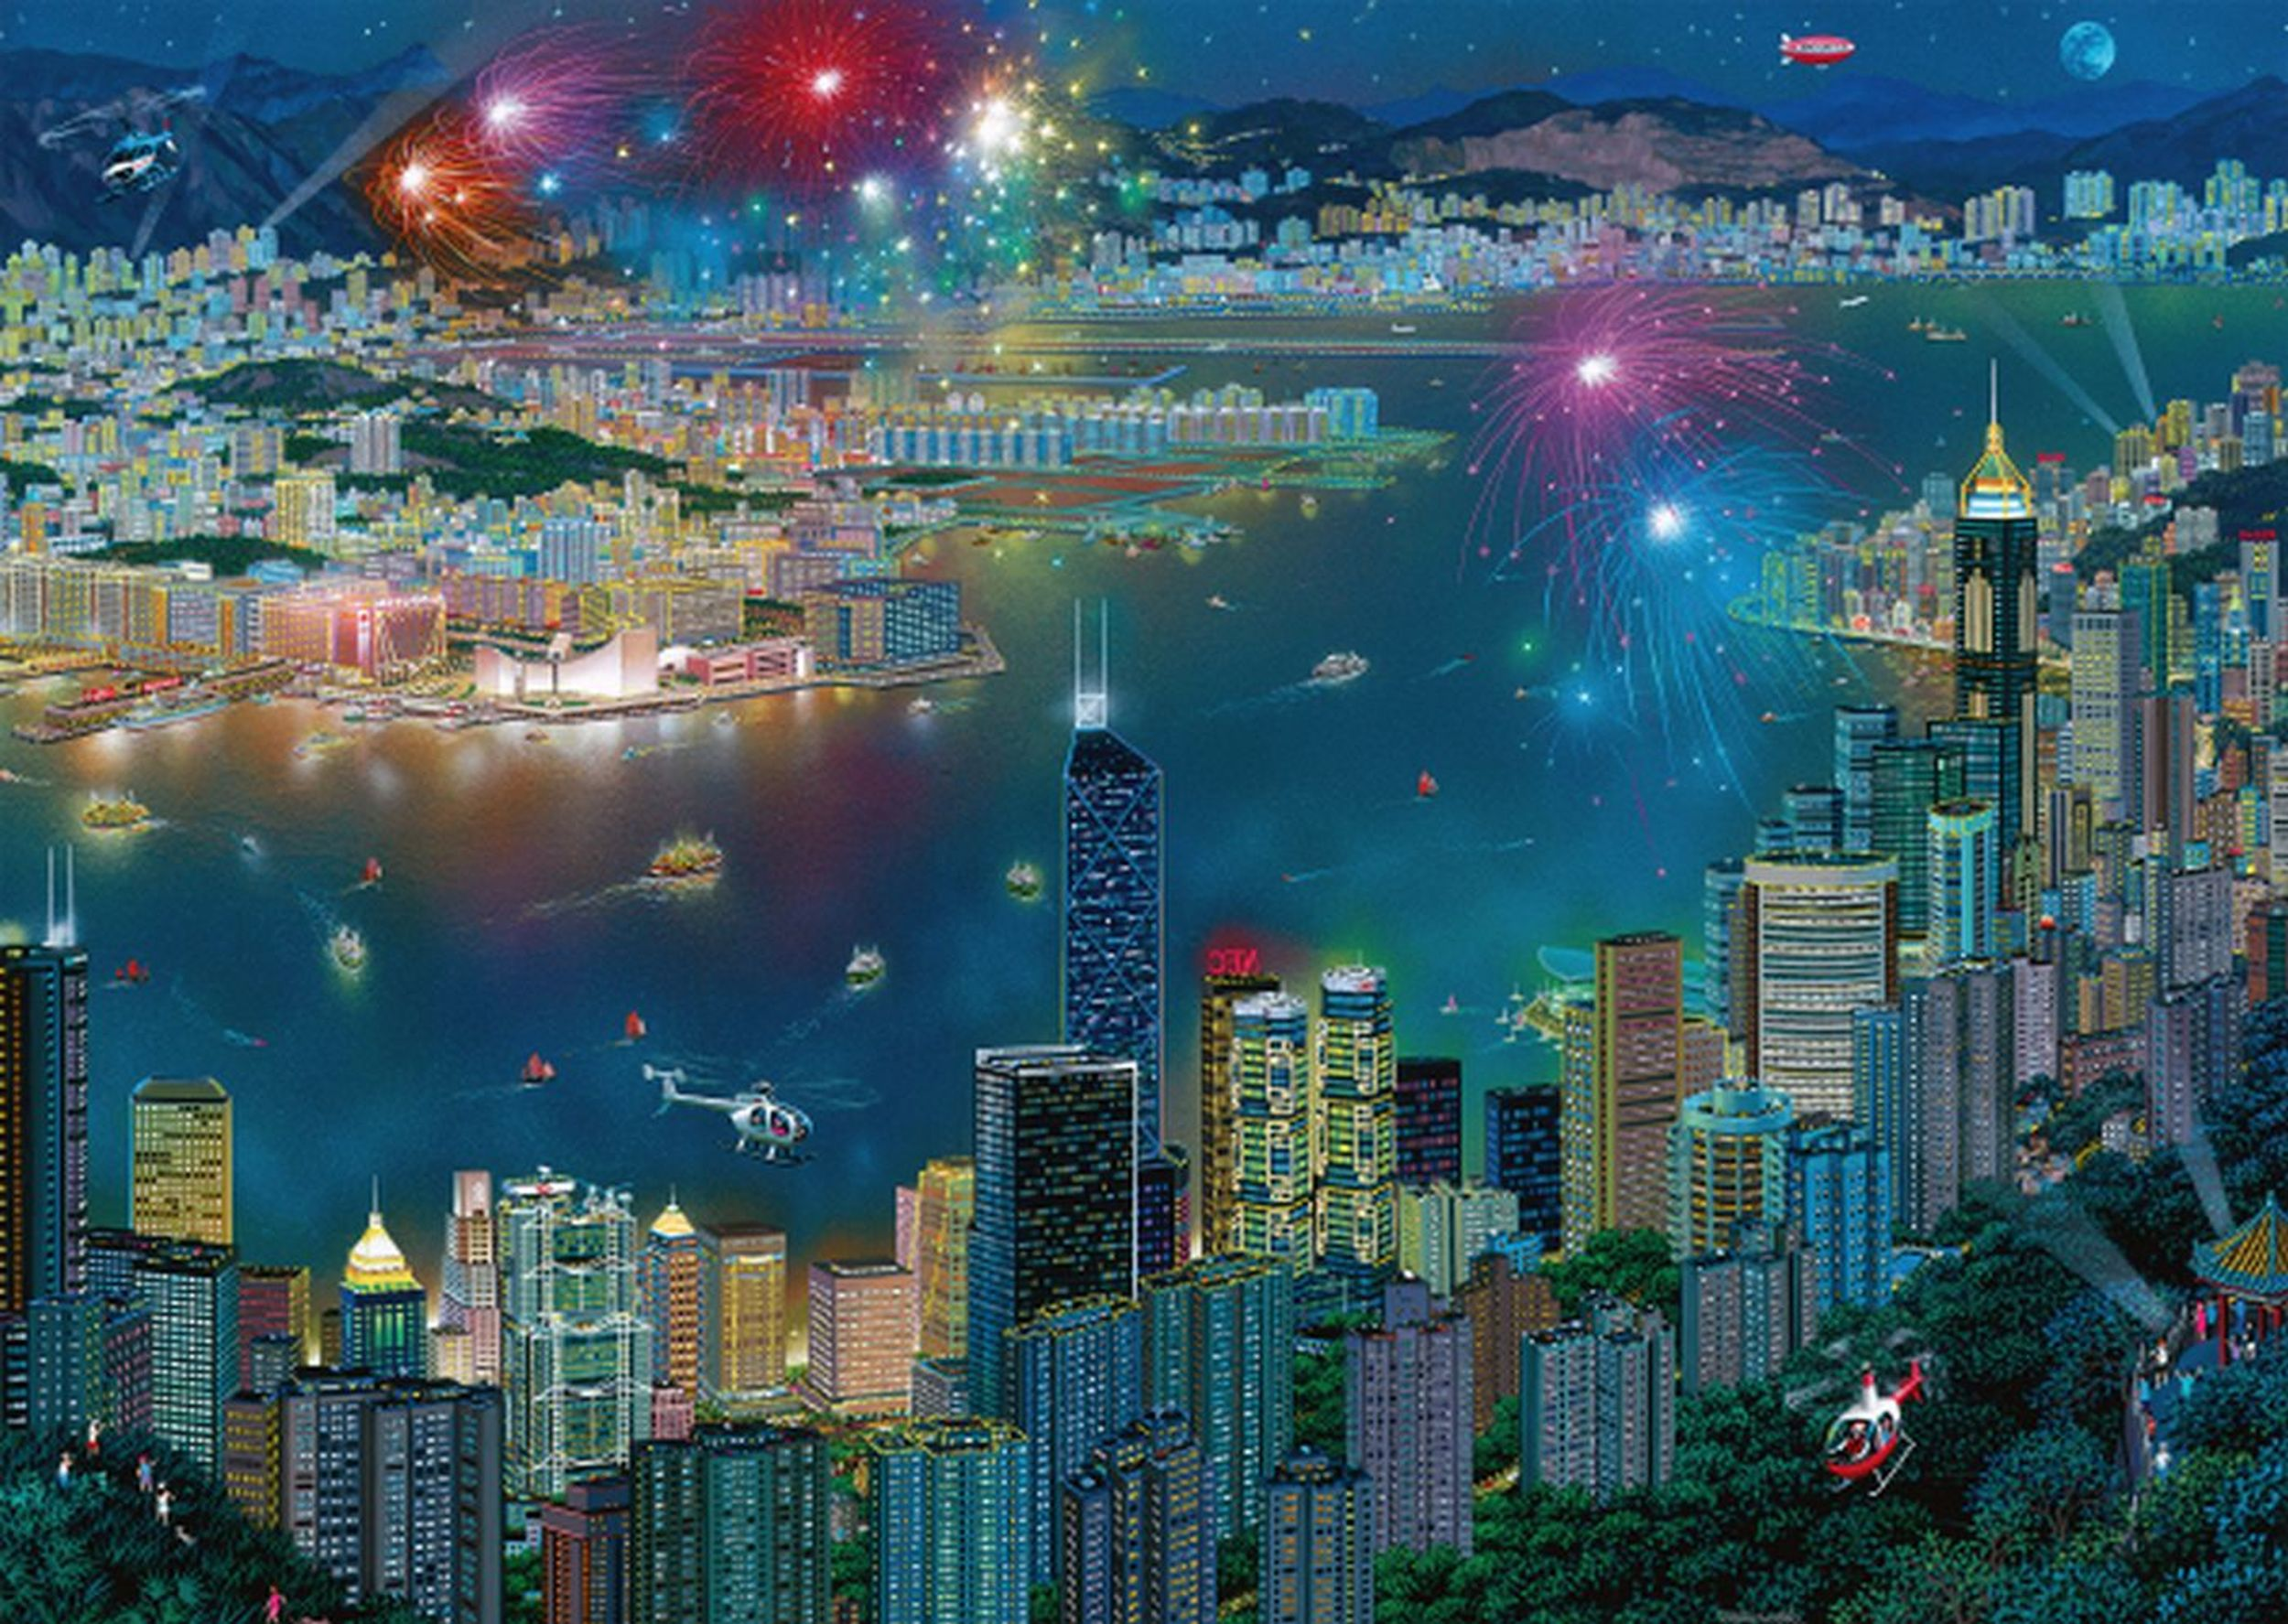 Puzzle SCHMIDT Feuerwerk SPIELE Hongkong über